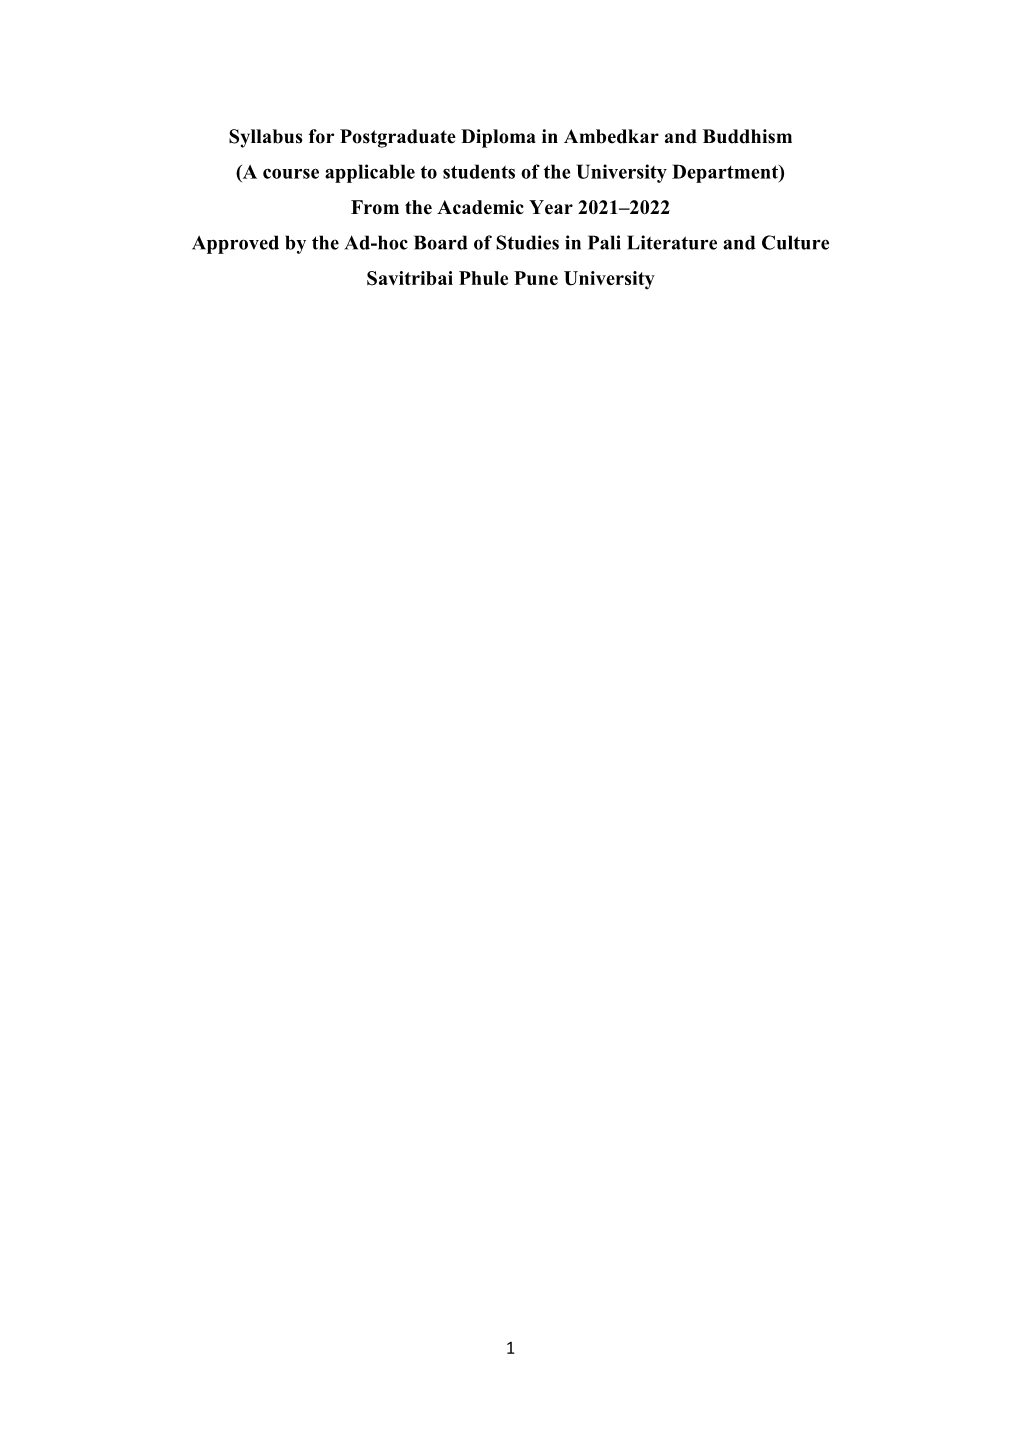 Syllabus for Postgraduate Diploma in Ambedkar and Buddhism